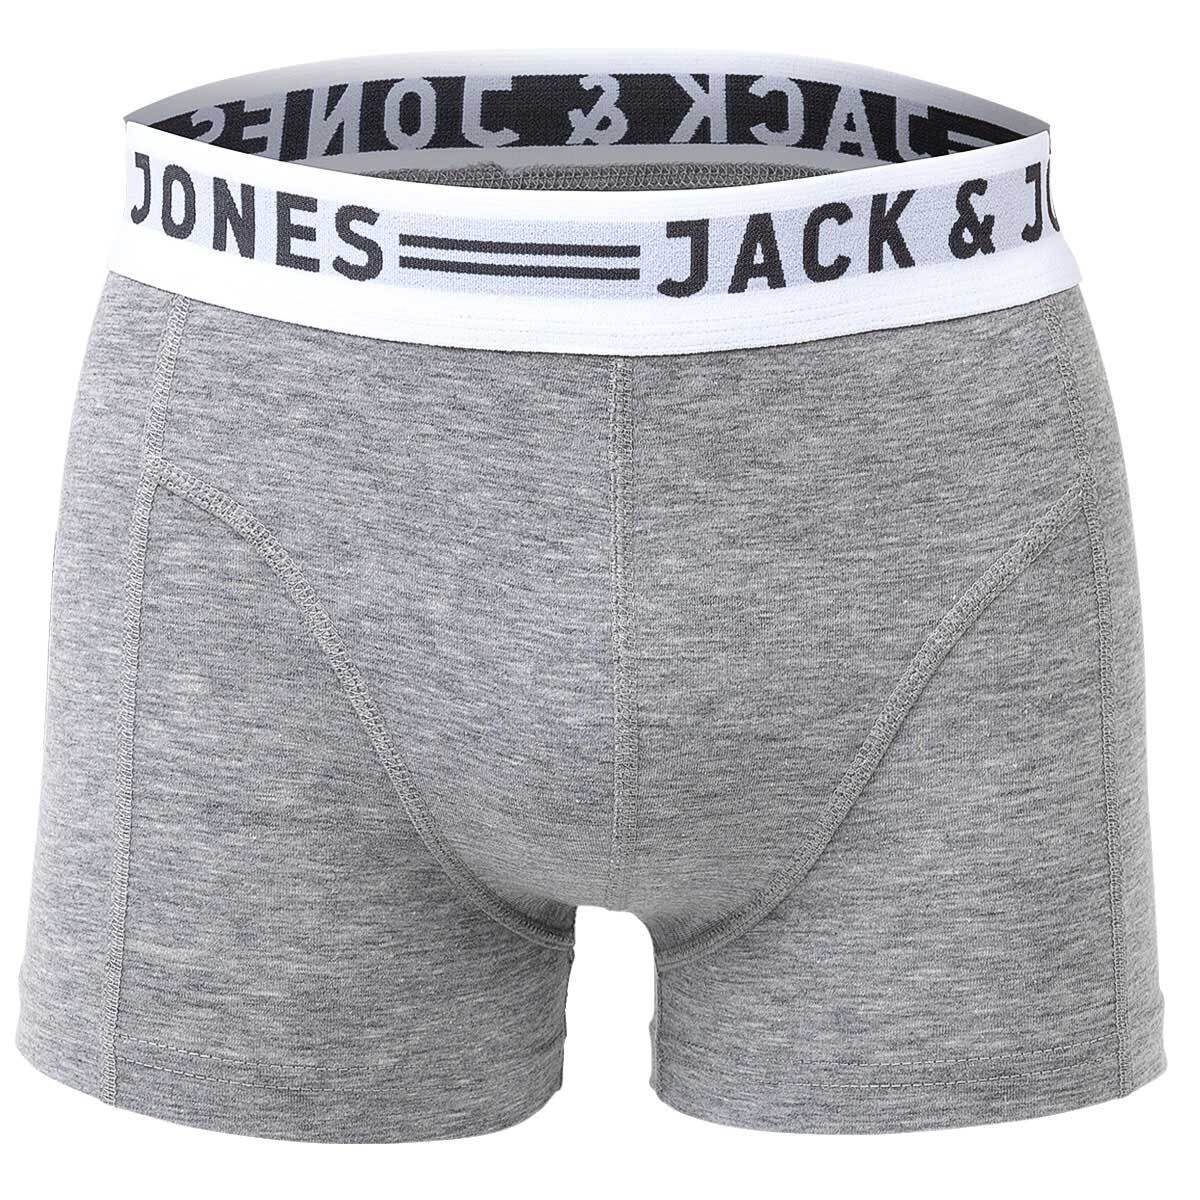 Jones Boxer 6er SENSE Jack & Boxer - Shorts, Schwarz/Grau/Weiß Herren Pack TRUNKS